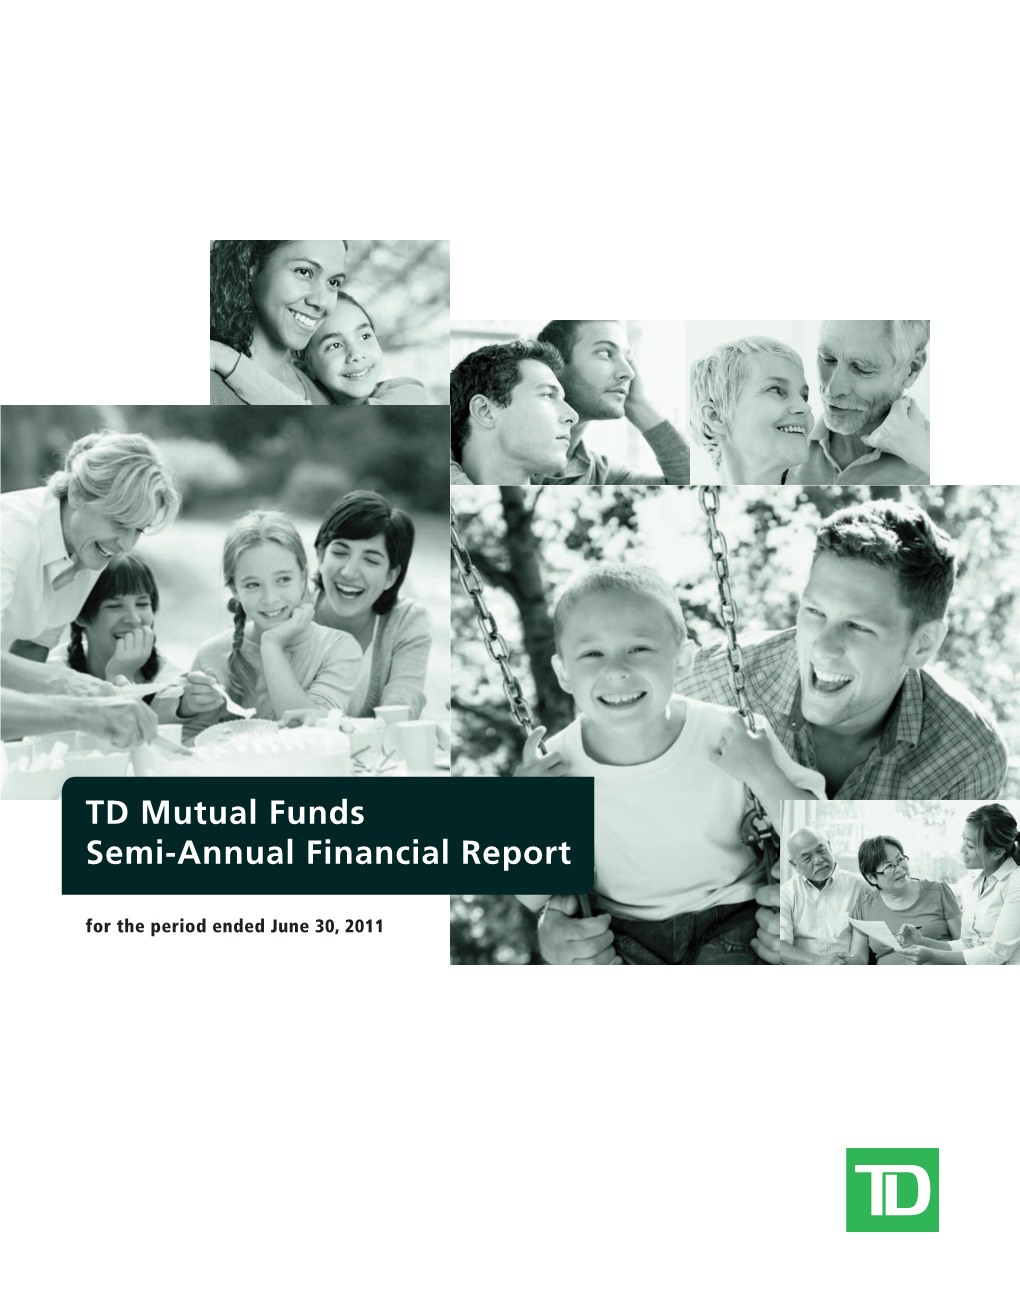 TD Mutual Funds Semi-Annual Financial Report